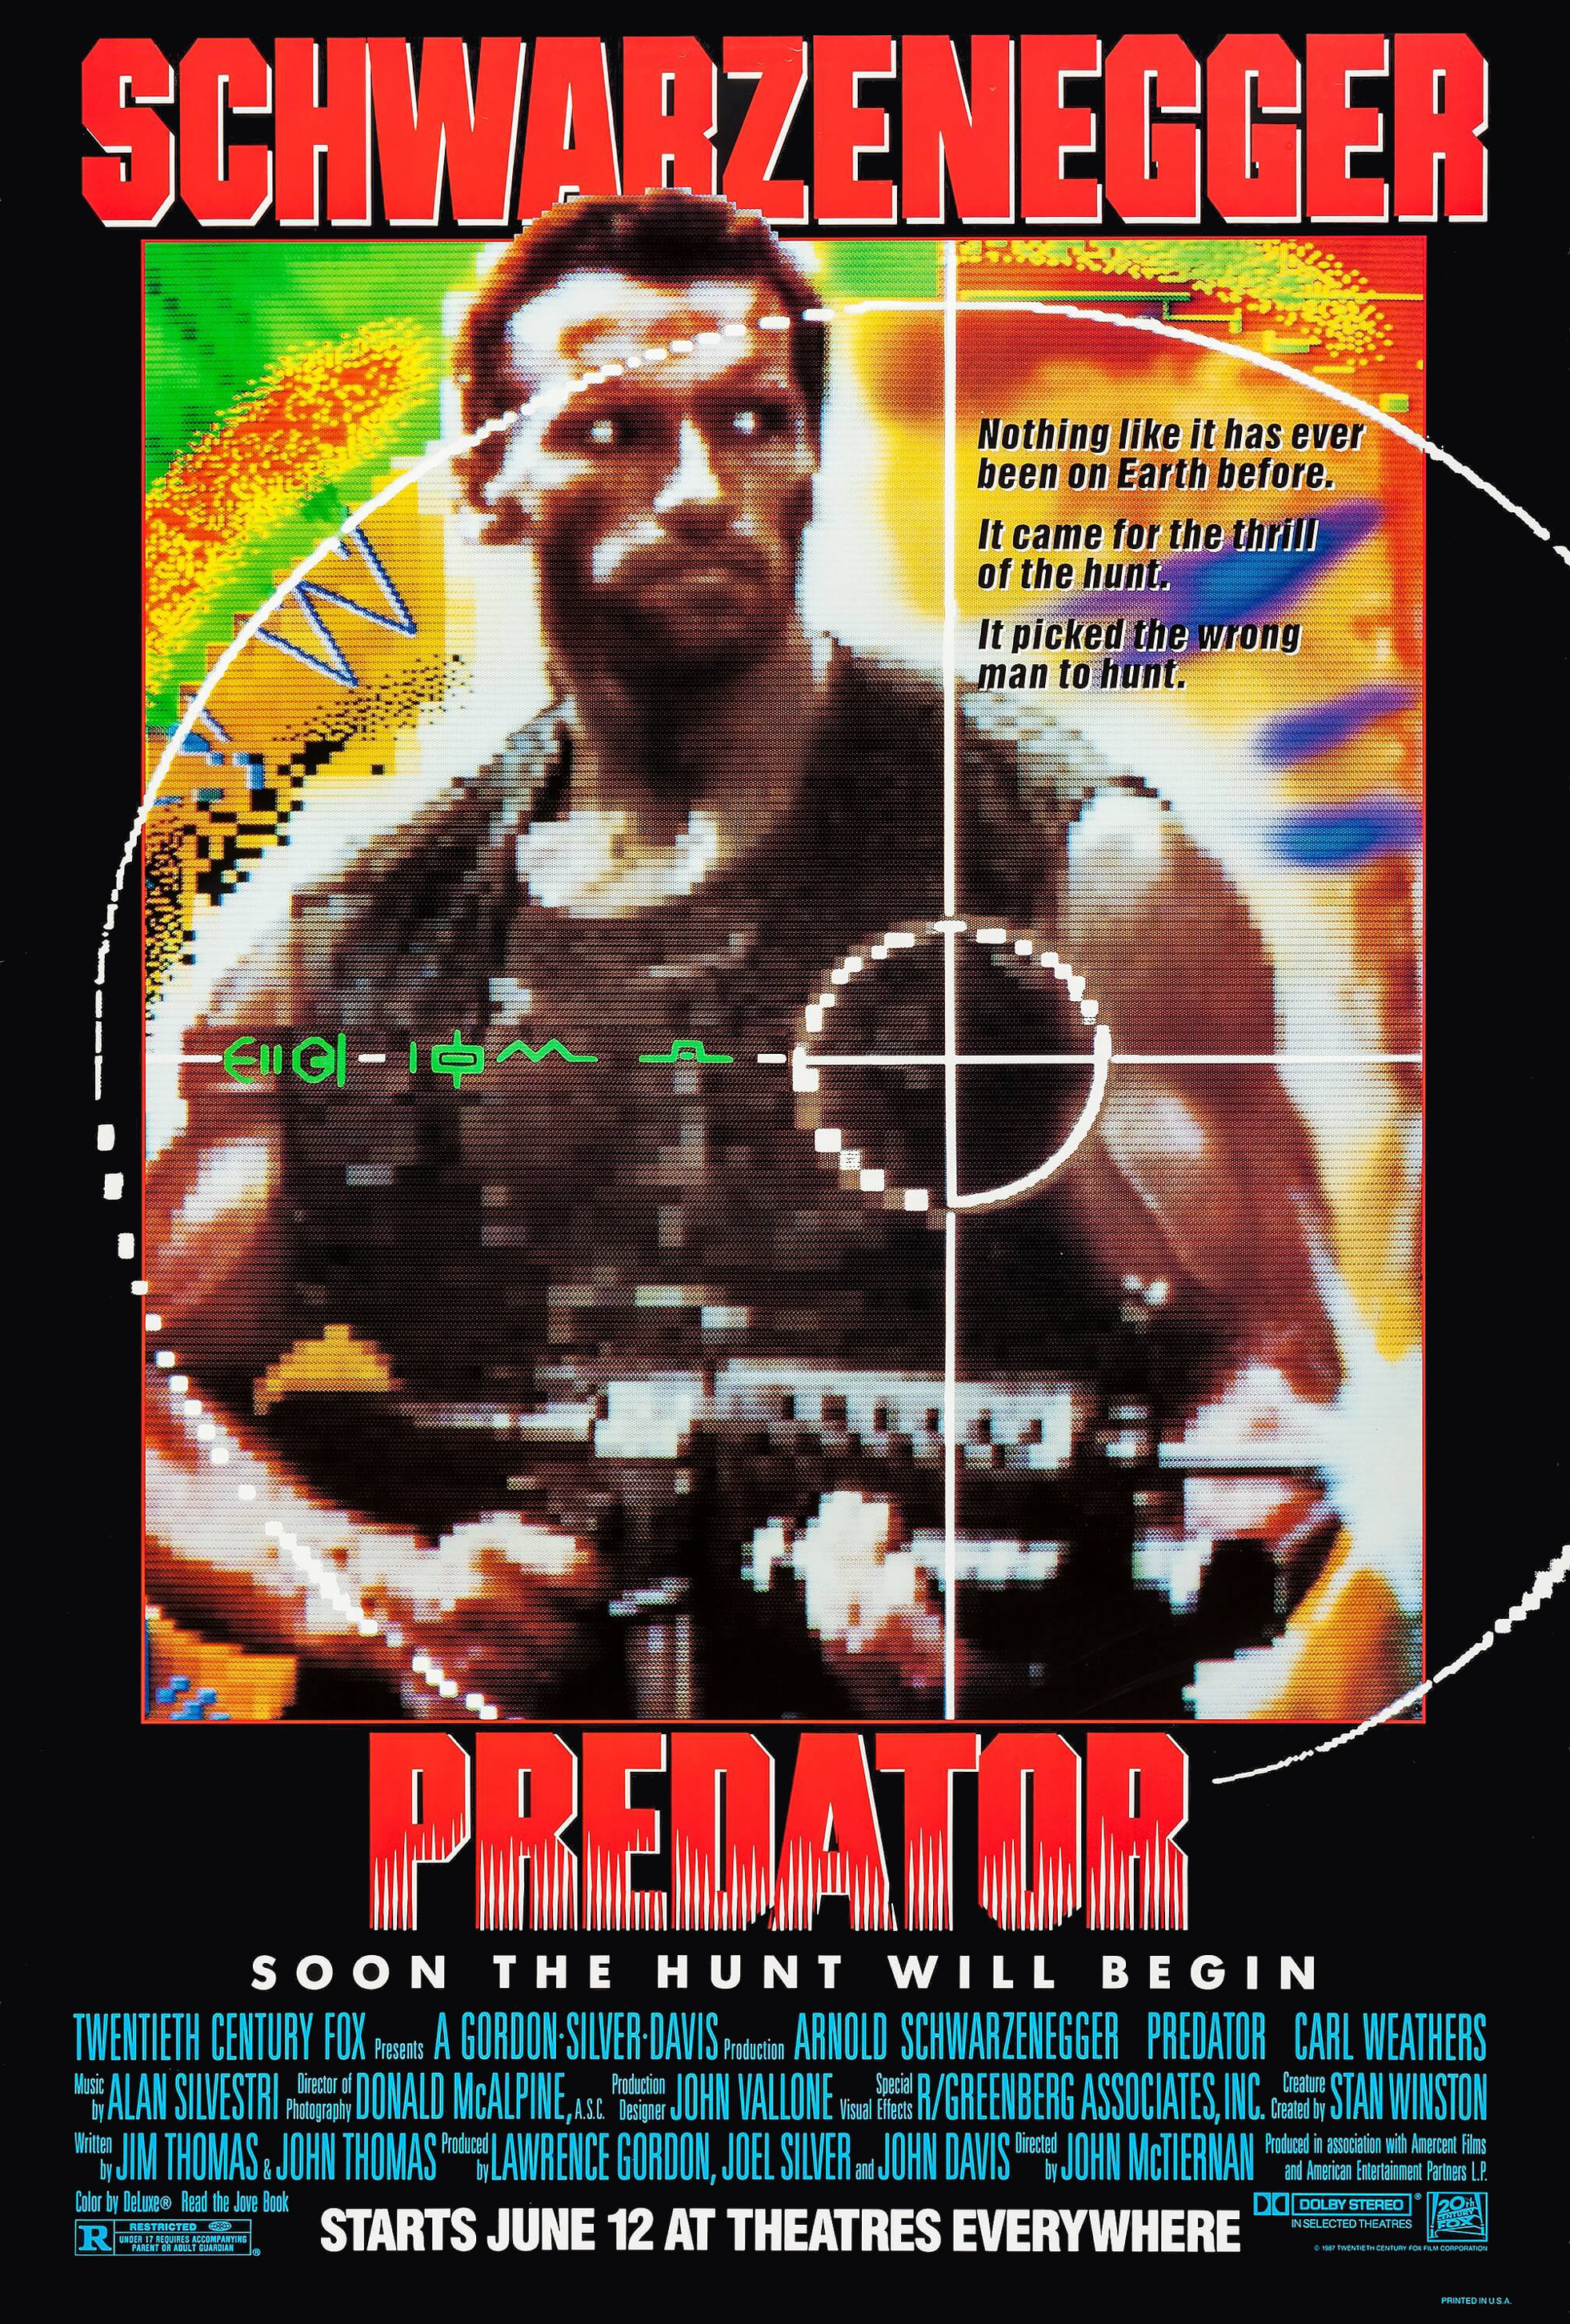 Aliens vs. Predator: Requiem Movie Poster (#2 of 7) - IMP Awards